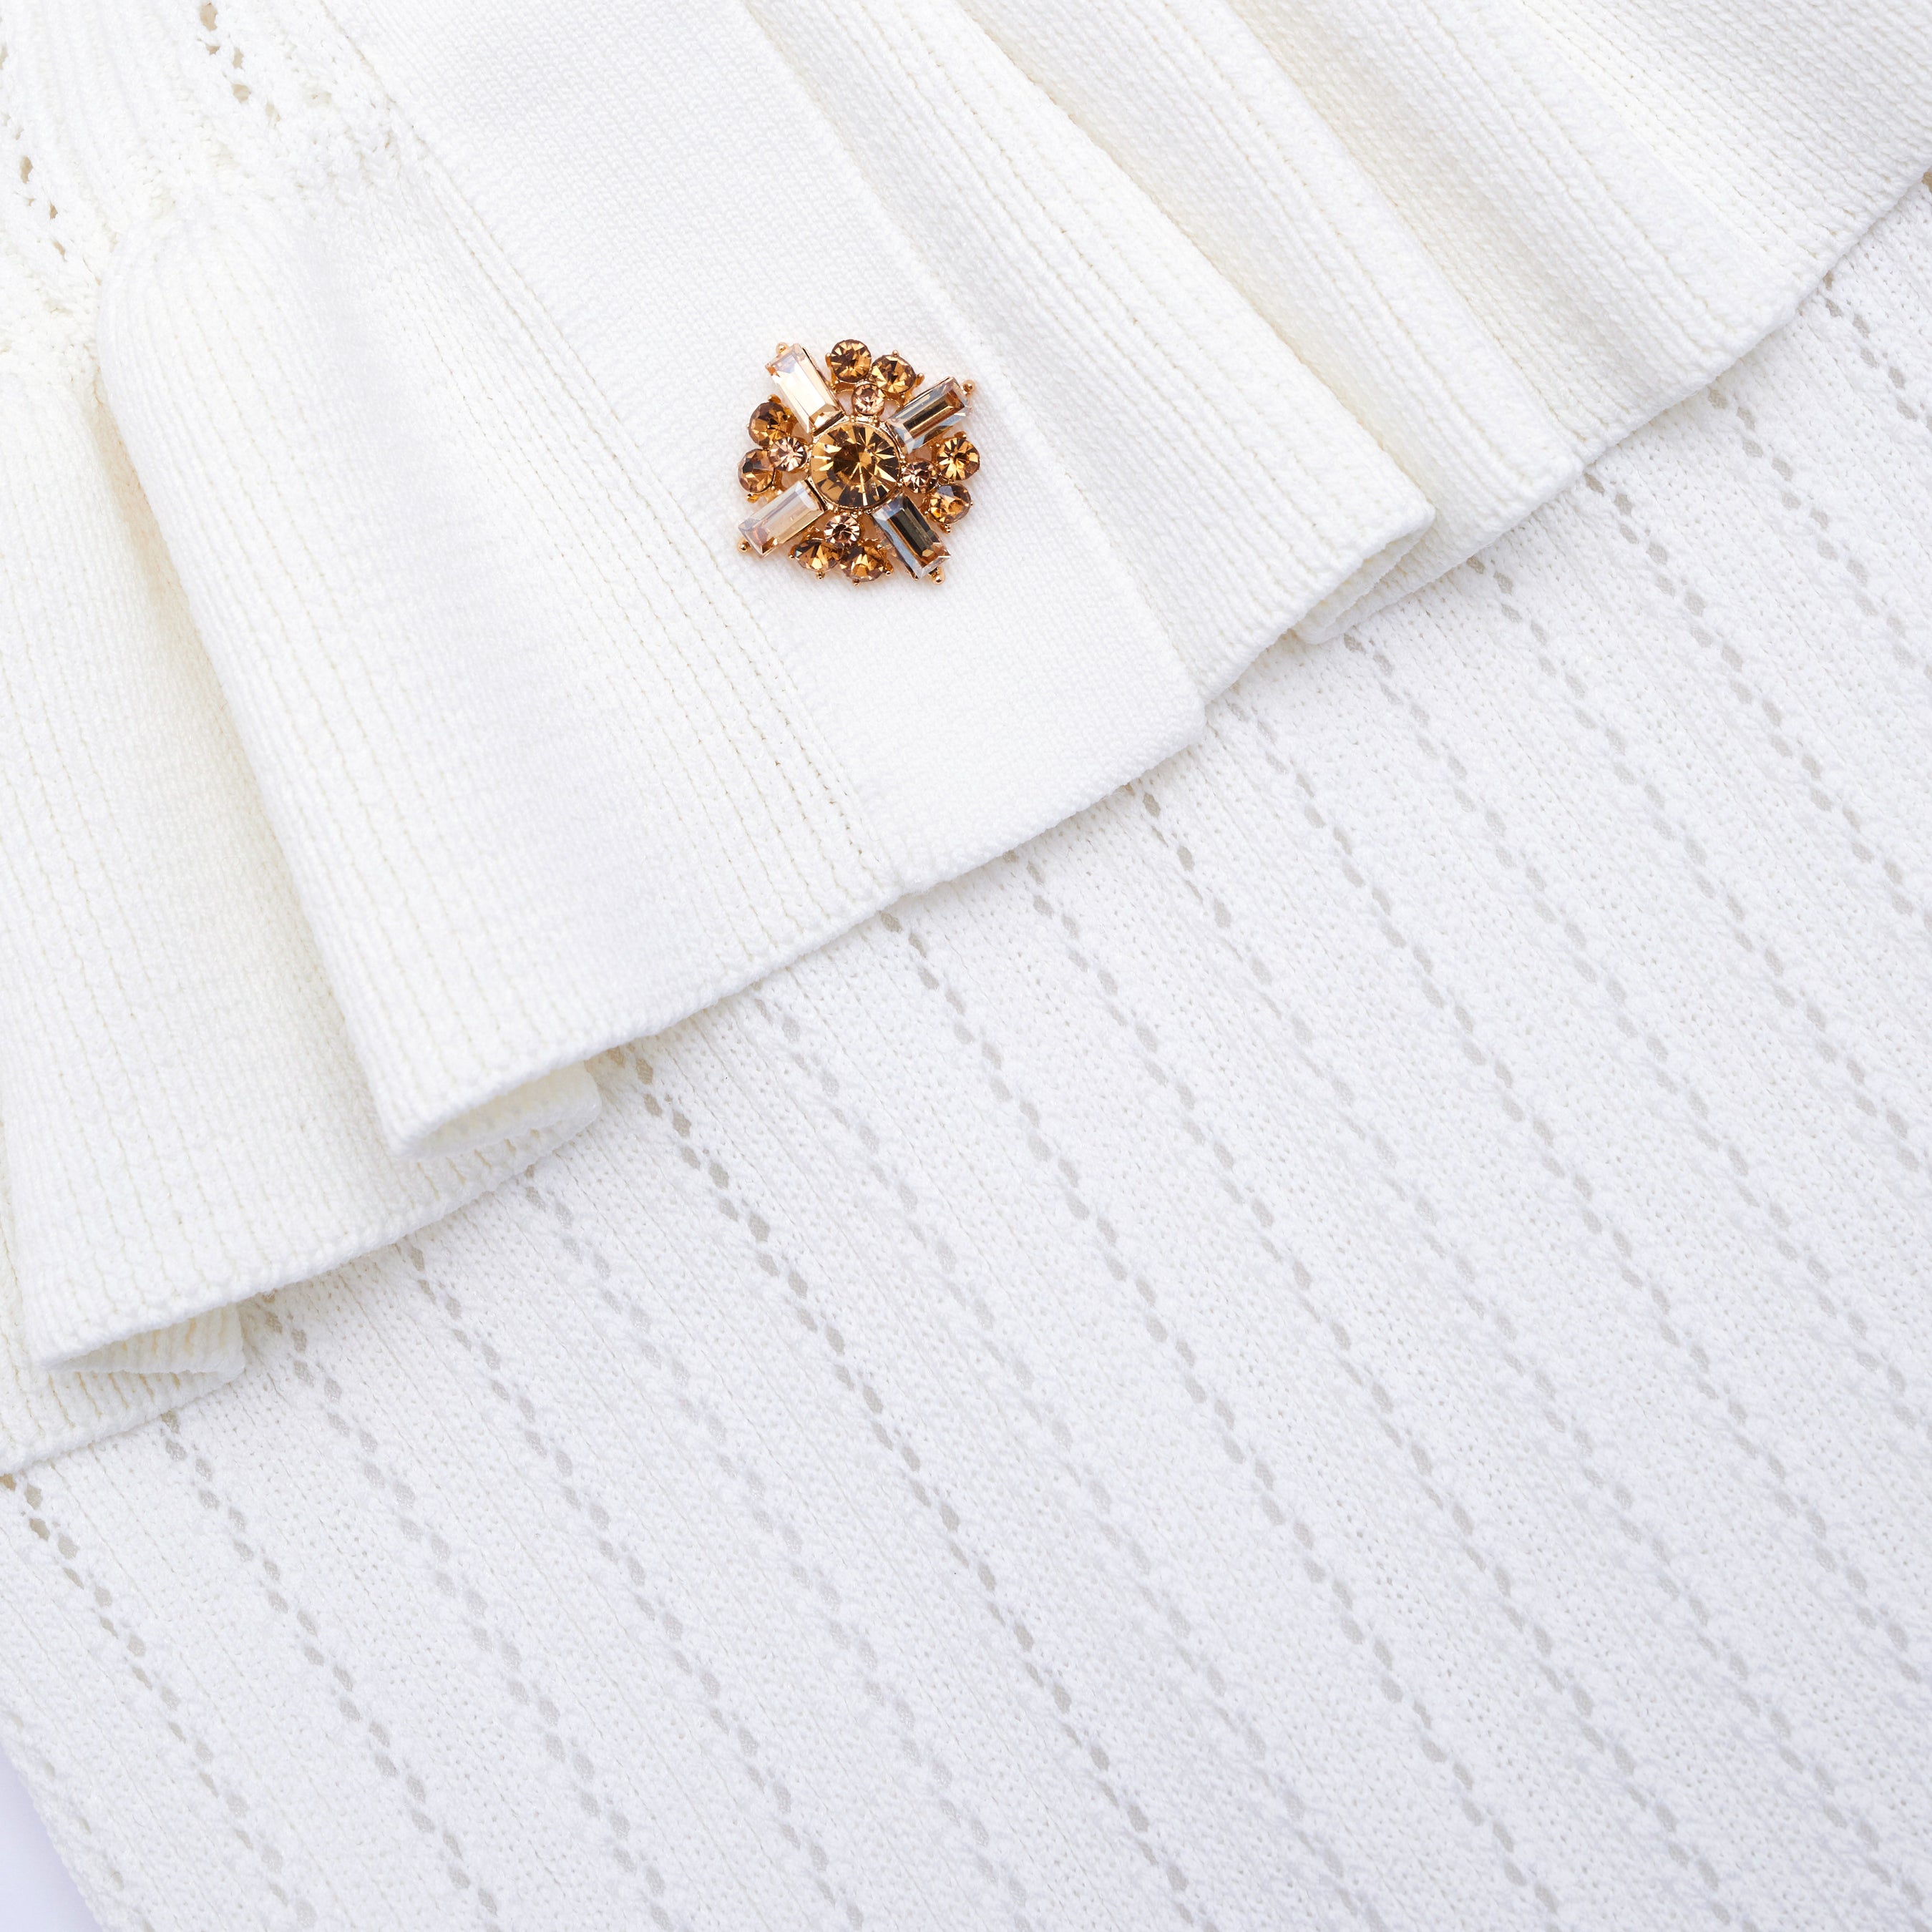 White Knit Peplum Midi Dress